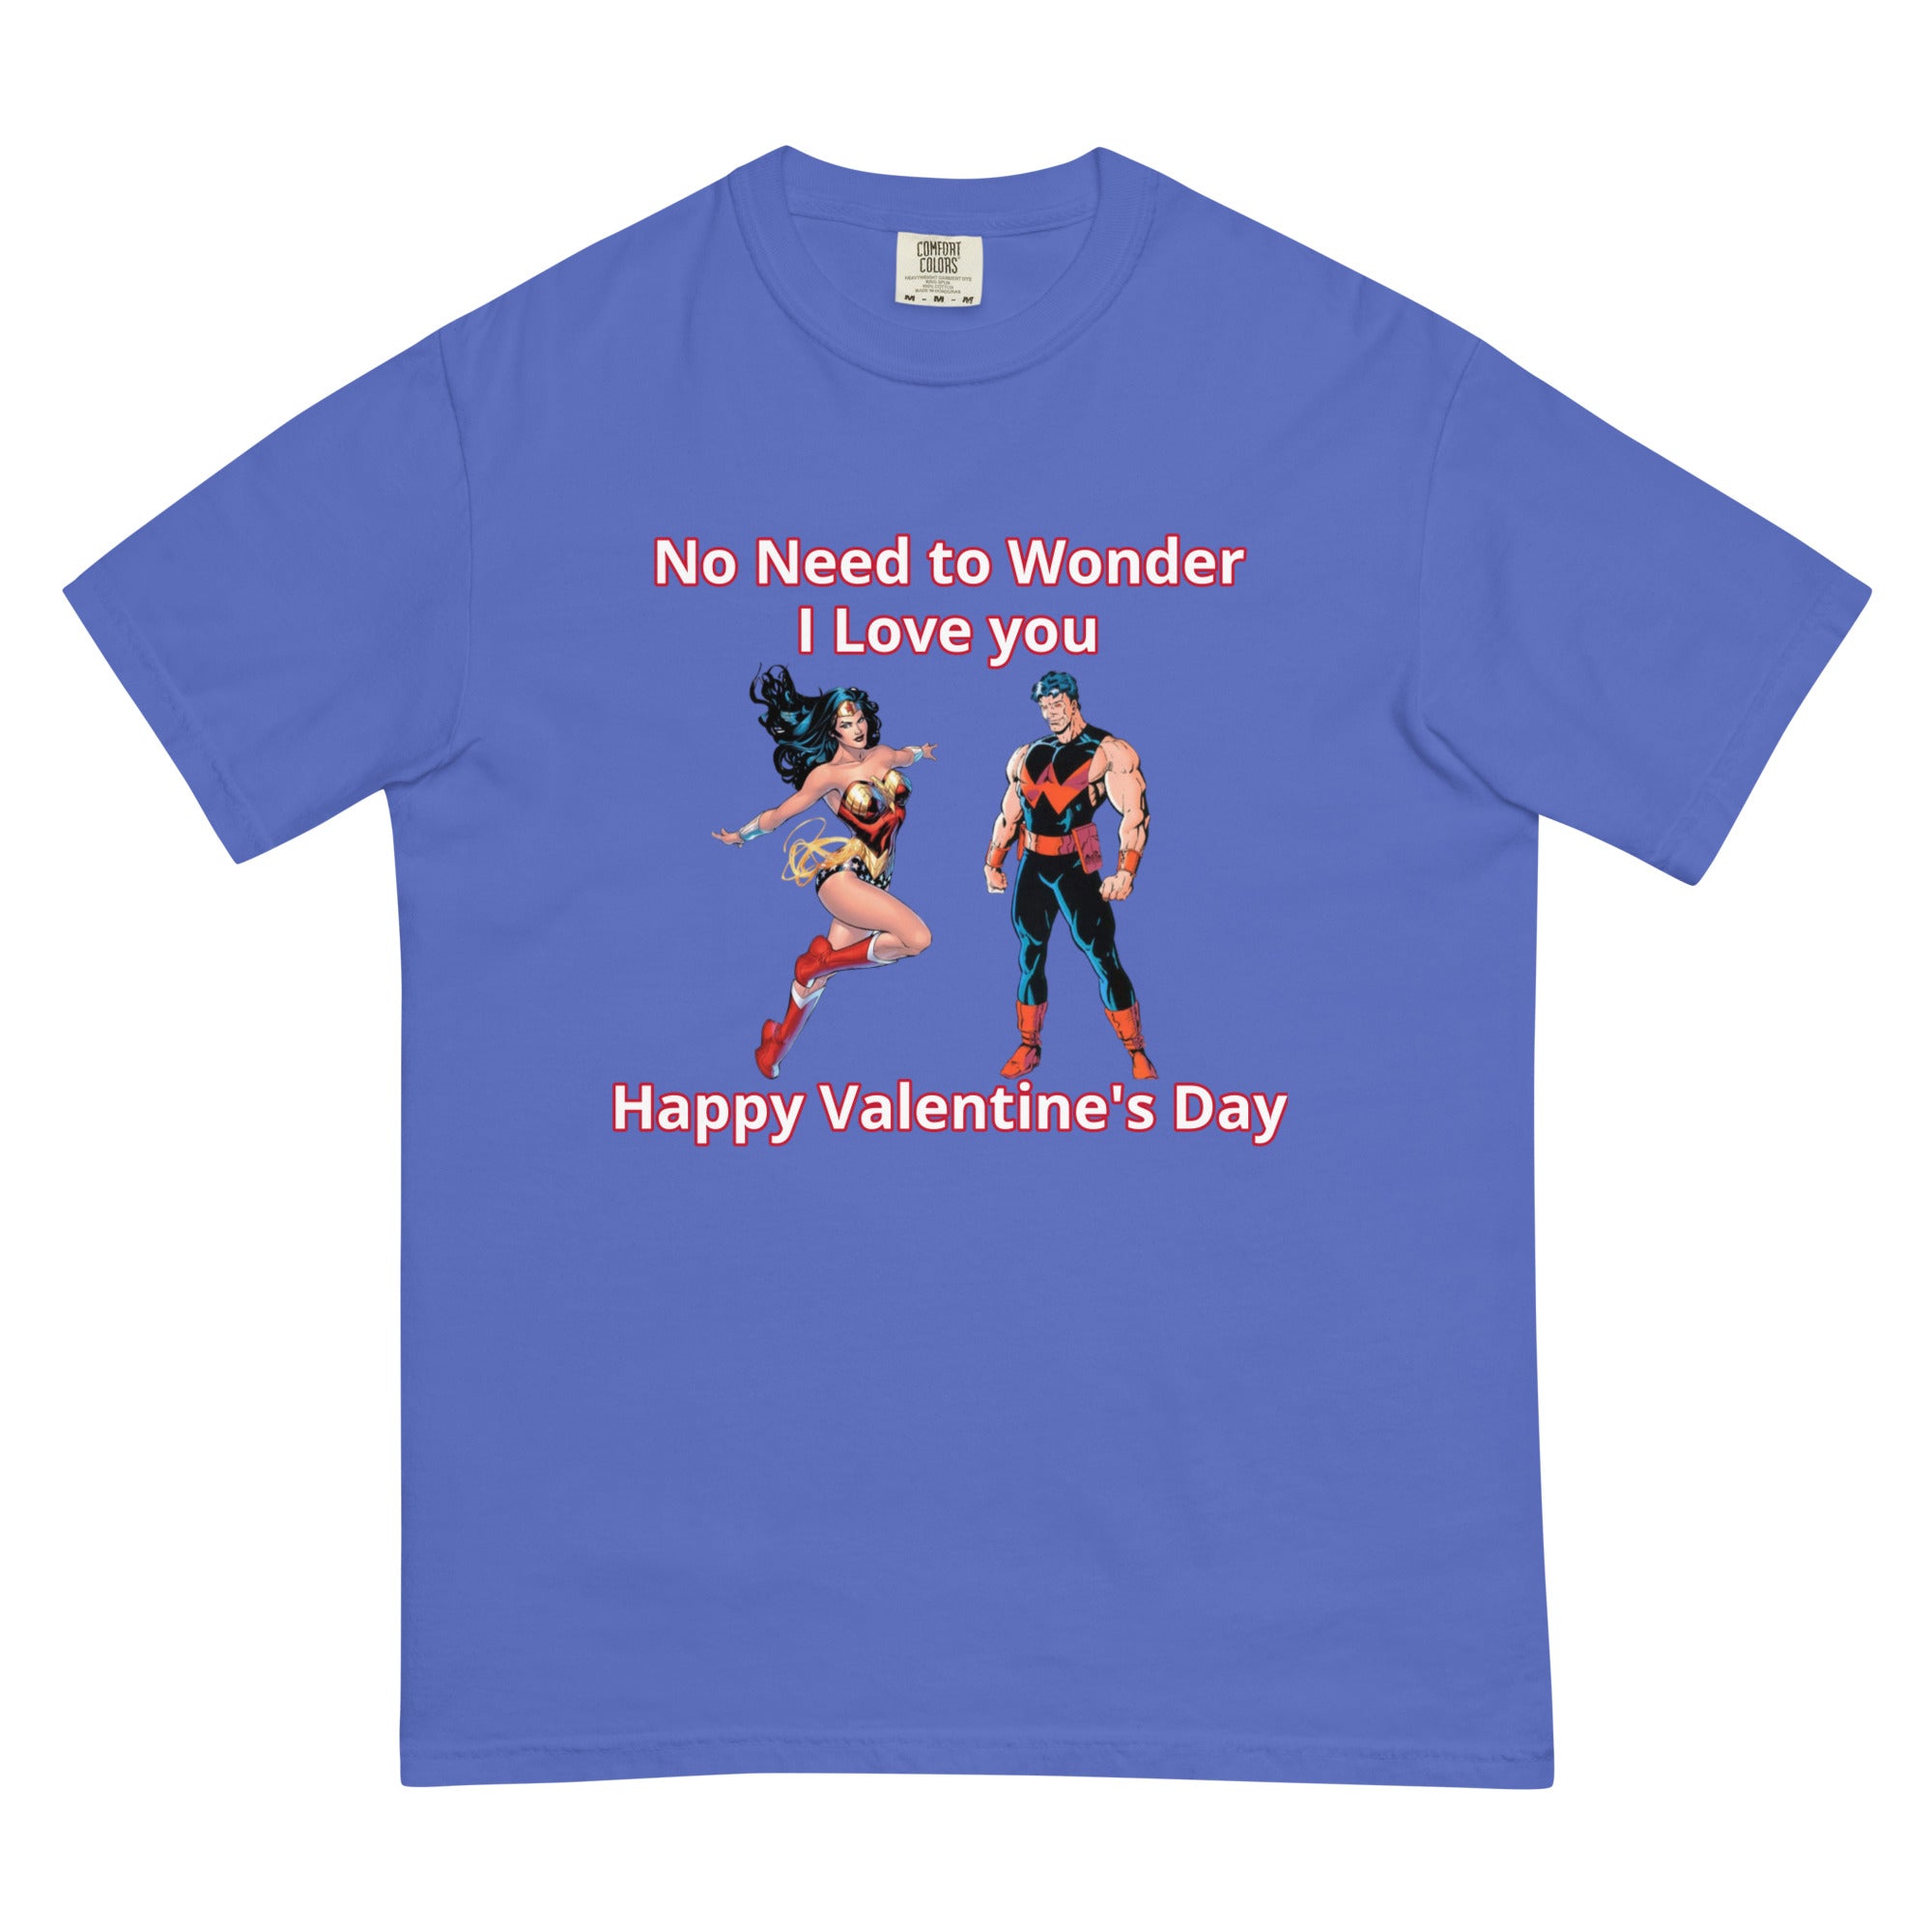 No Need to Wonder - Valentine's Day heavyweight t-shirt